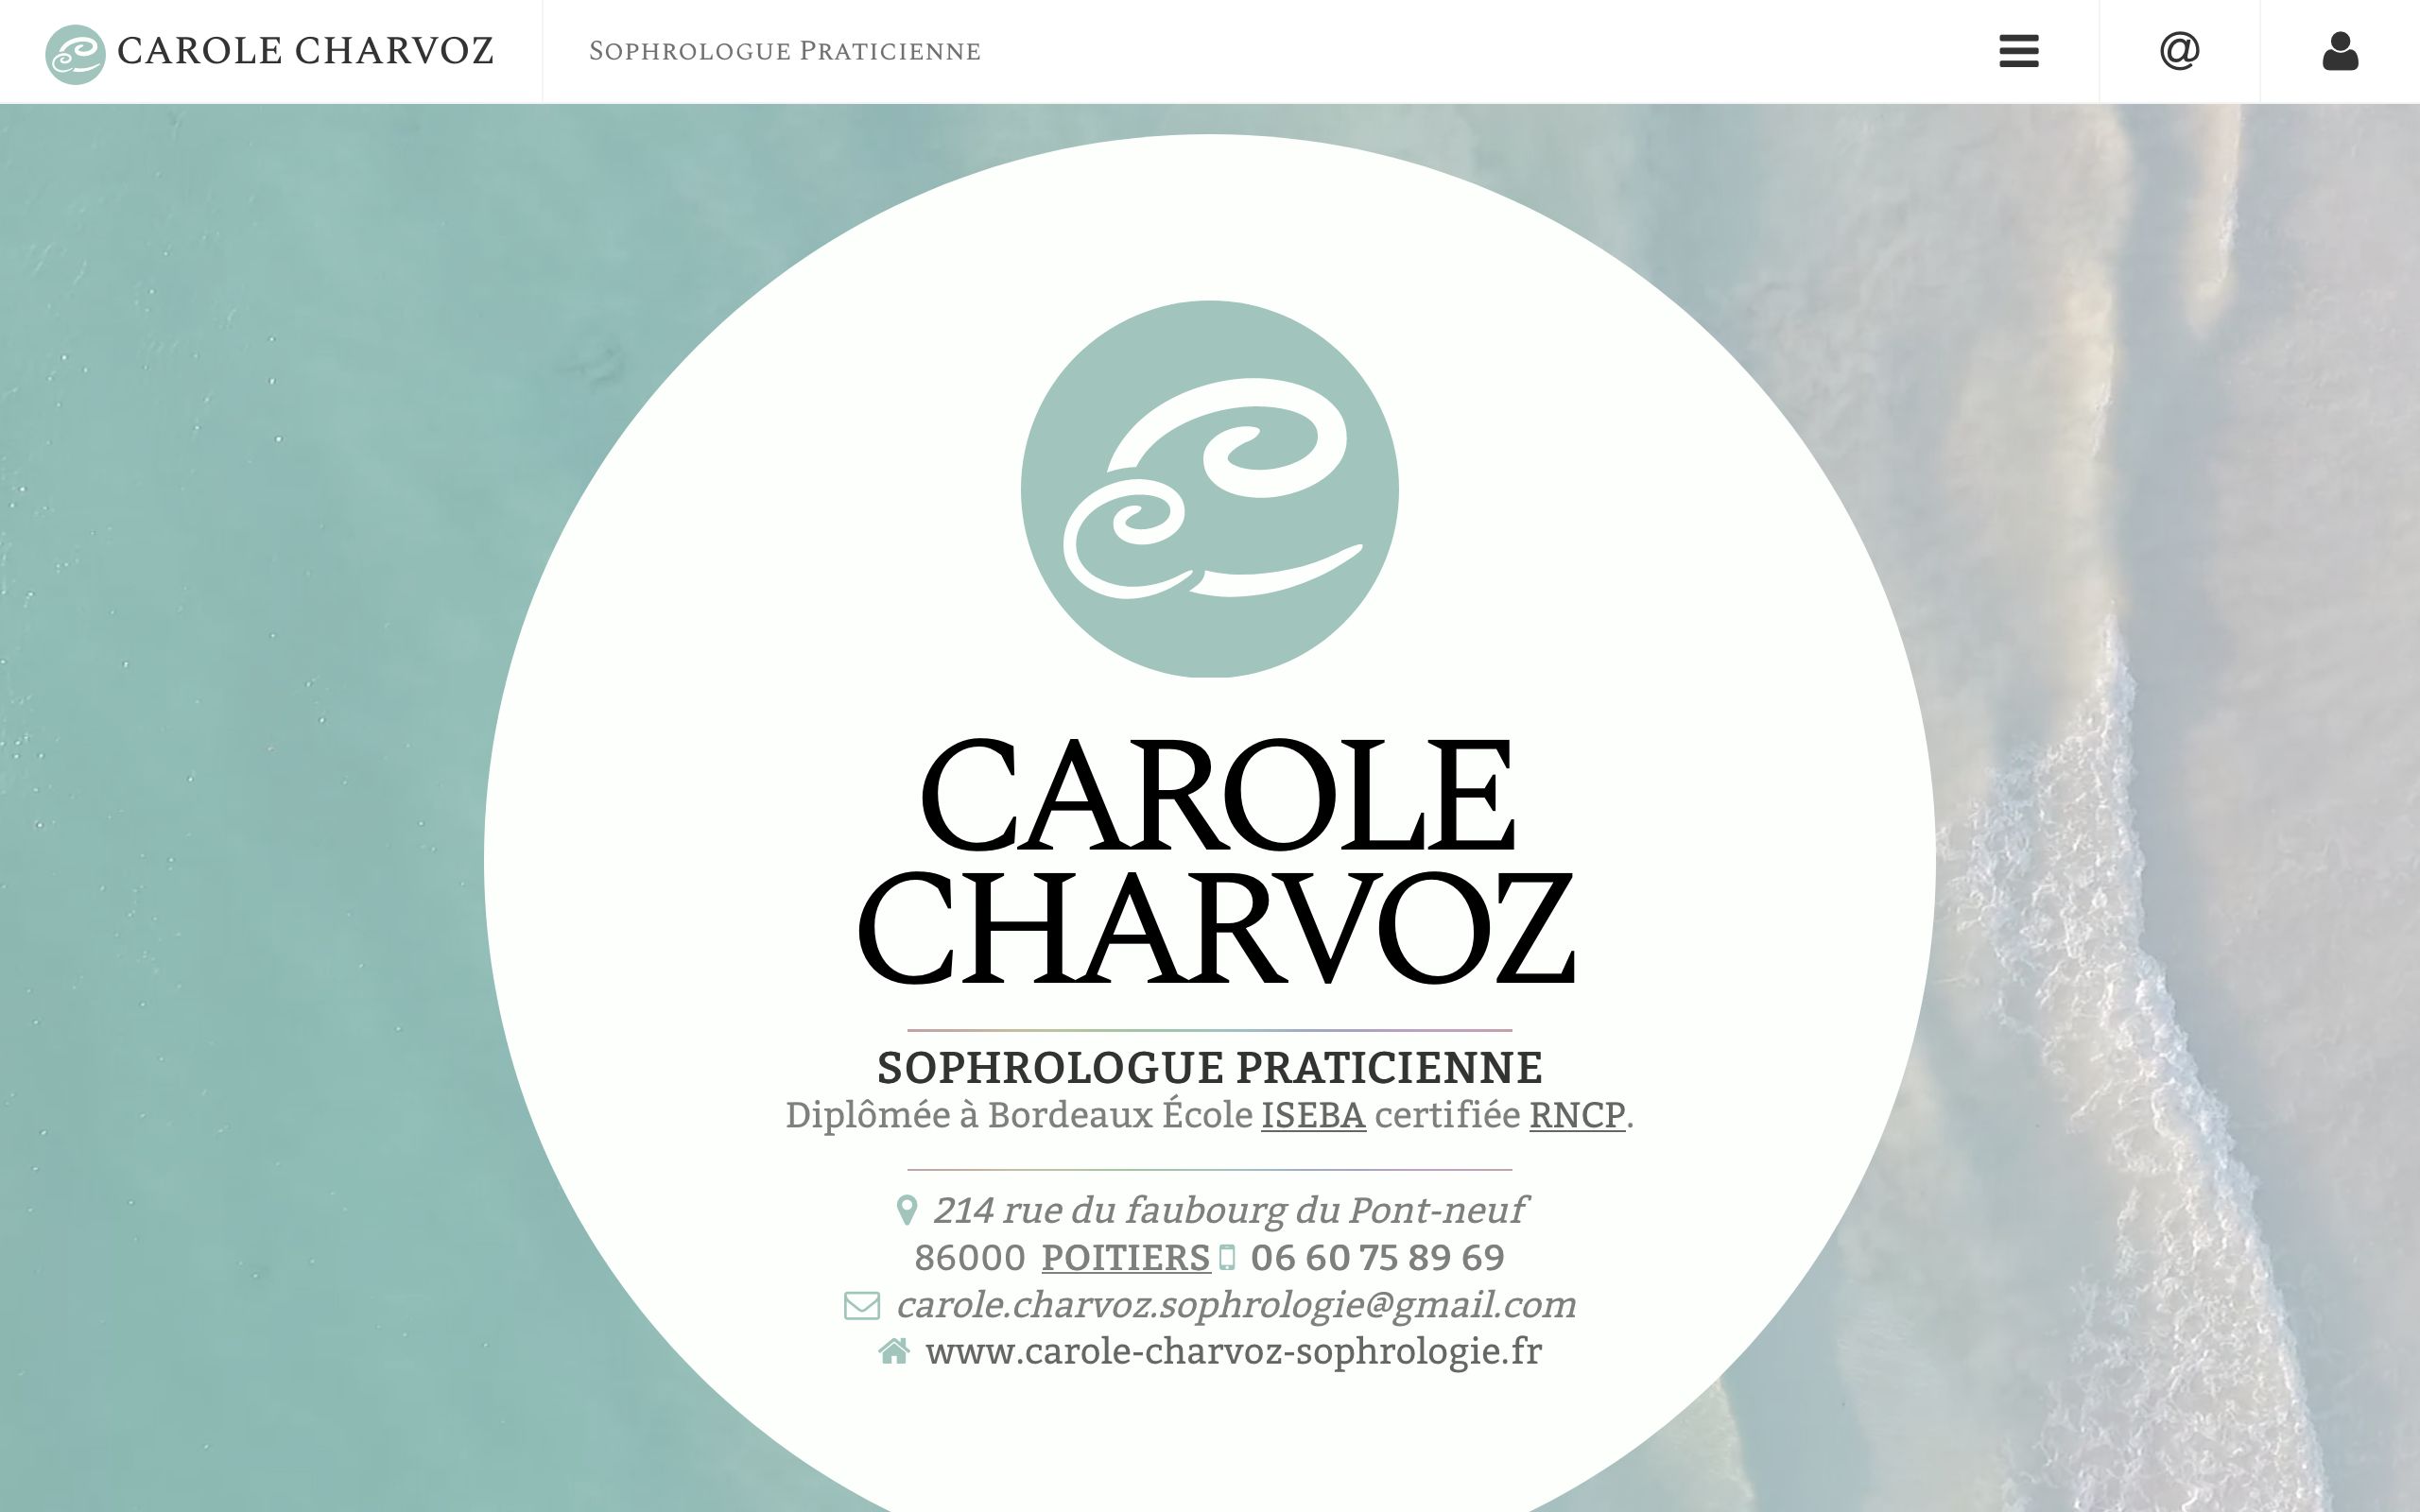 Carole Charvoz